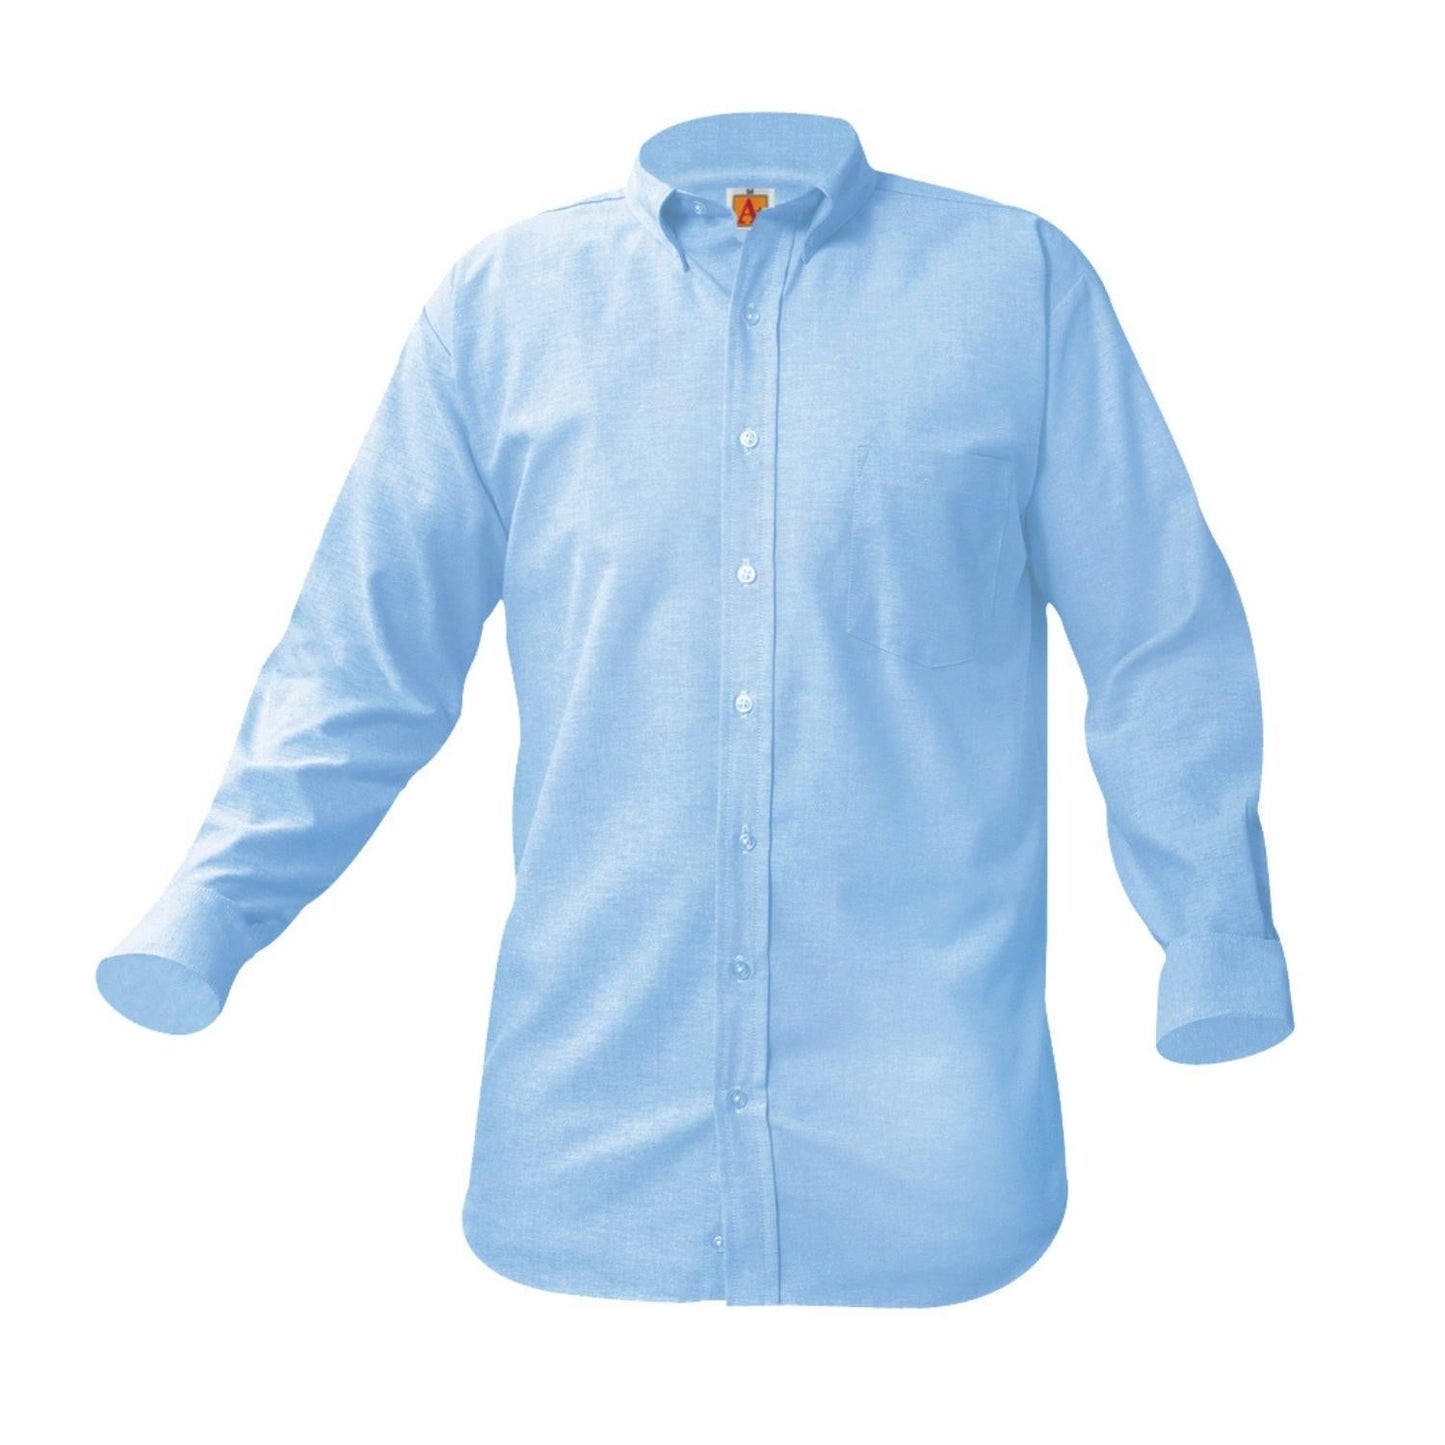 Oxford Long Sleeve Shirt (Male) w/Logo - 1101